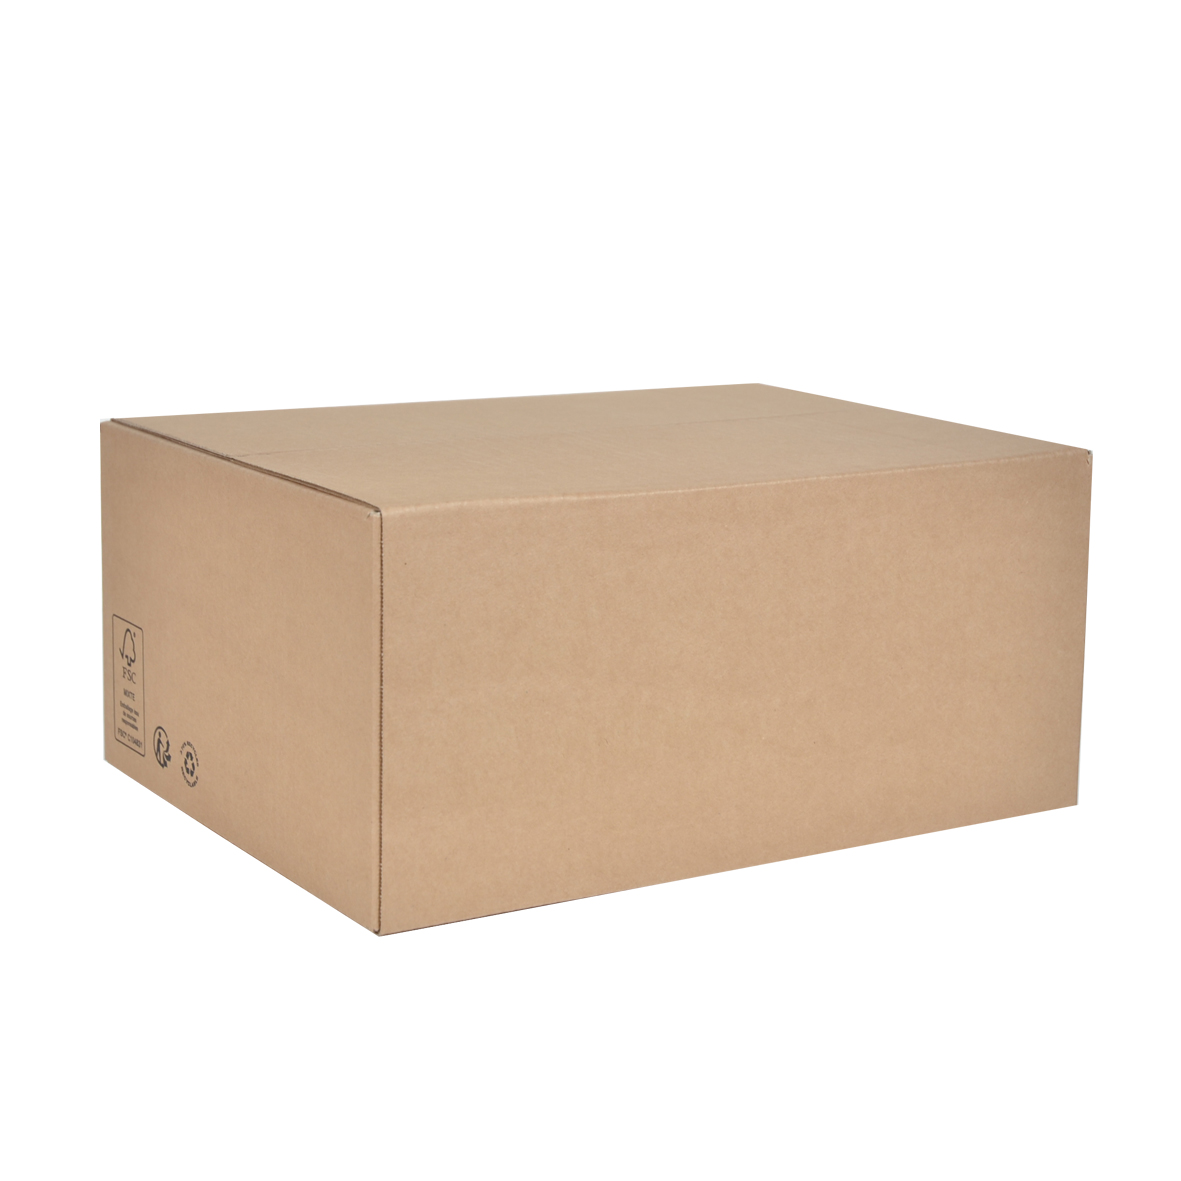 Carton d'emballage simple cannelure 36x27x16 cm (Lot de 10)